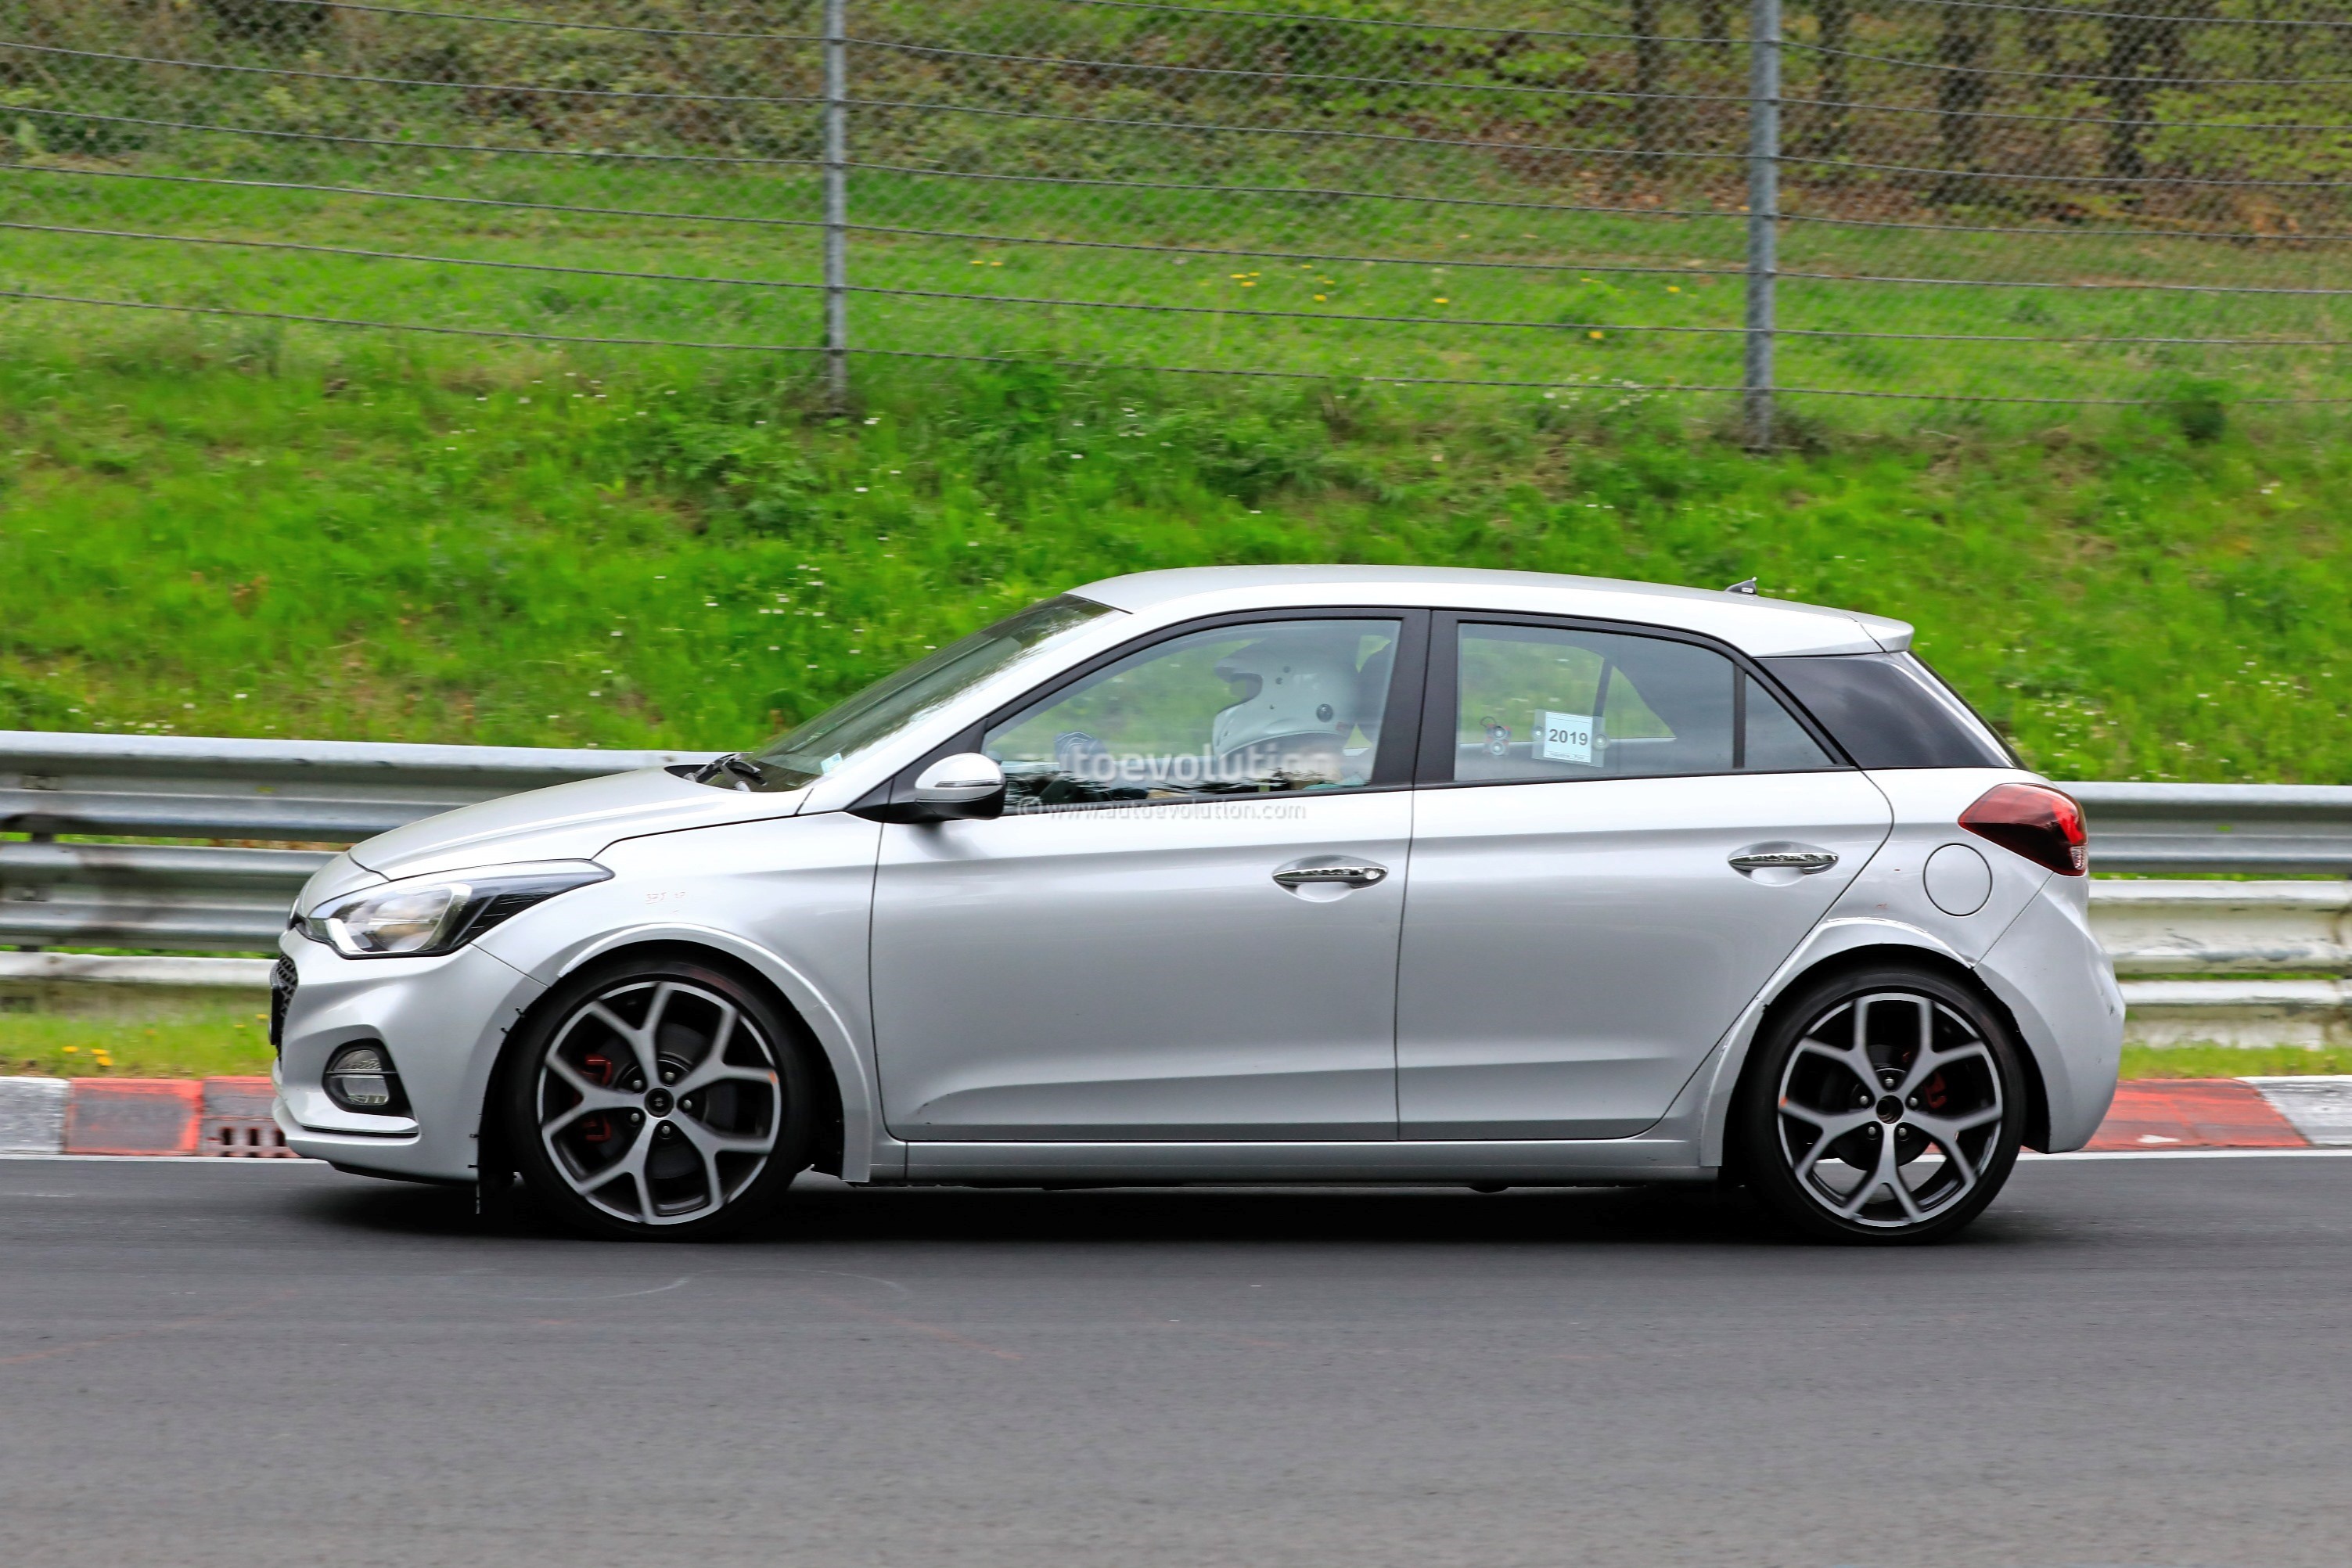 Hyundai I N Spied Testing At The Nurburgring Autoevolution